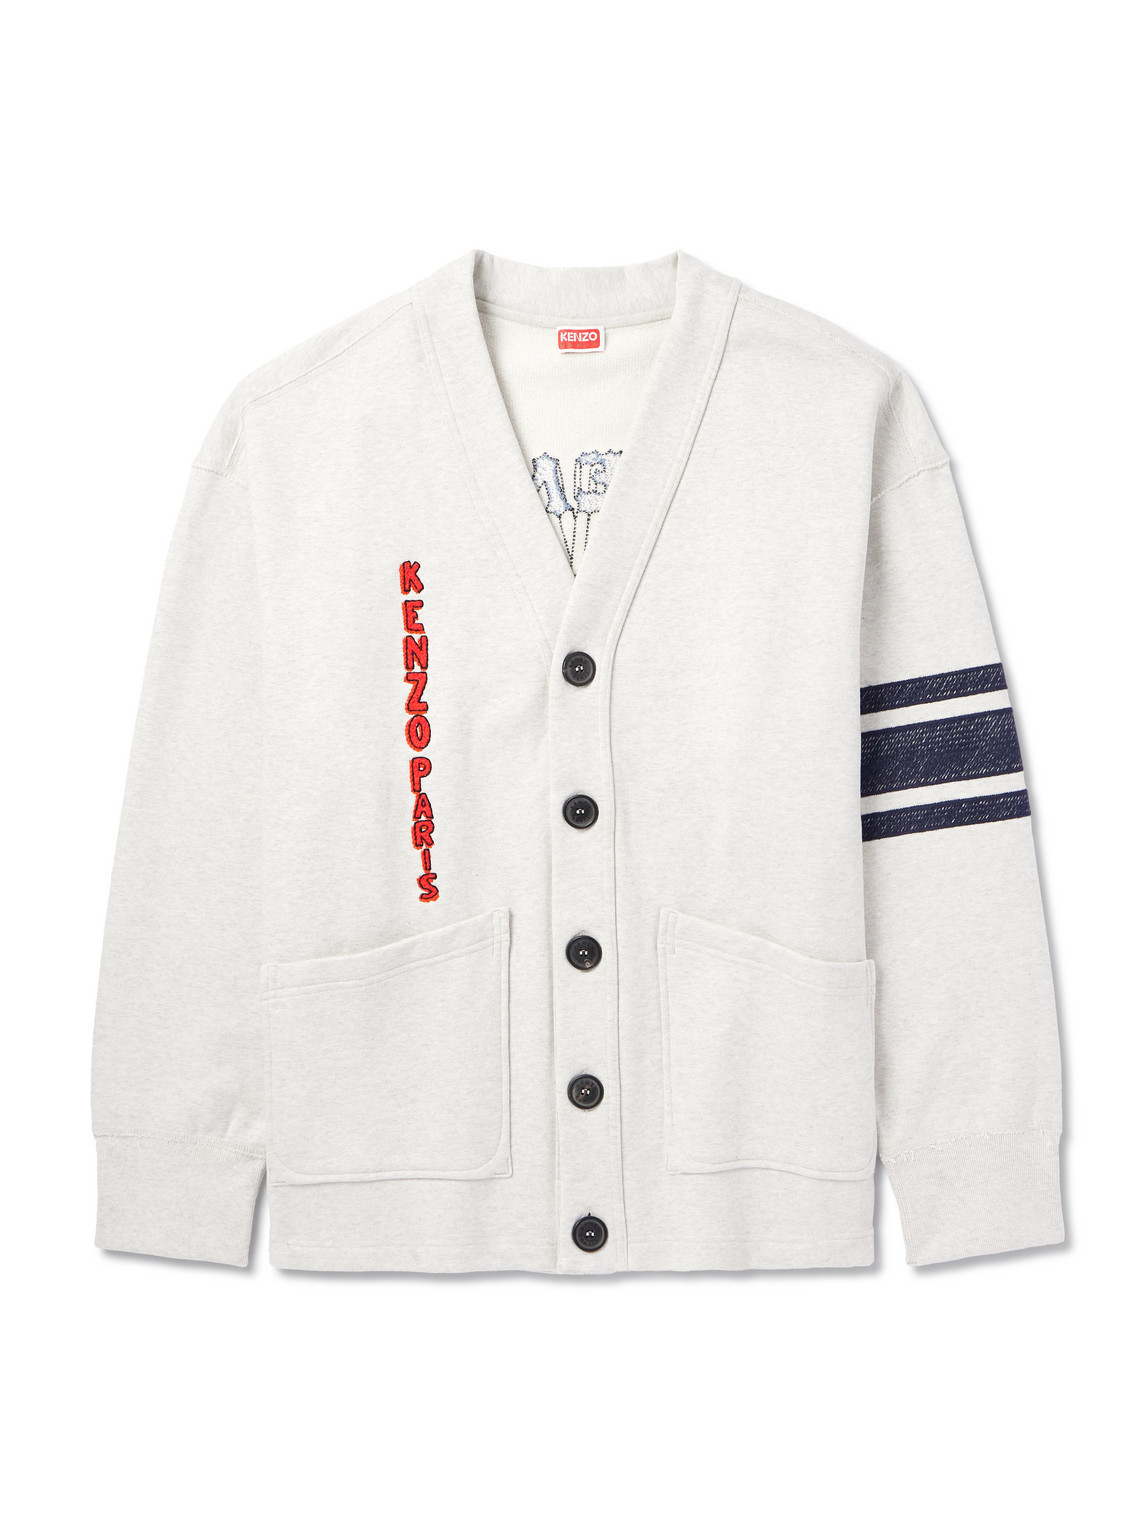 KENZO - Embroidered Striped Cotton-Blend Jersey Cardigan - Men - White - L von KENZO